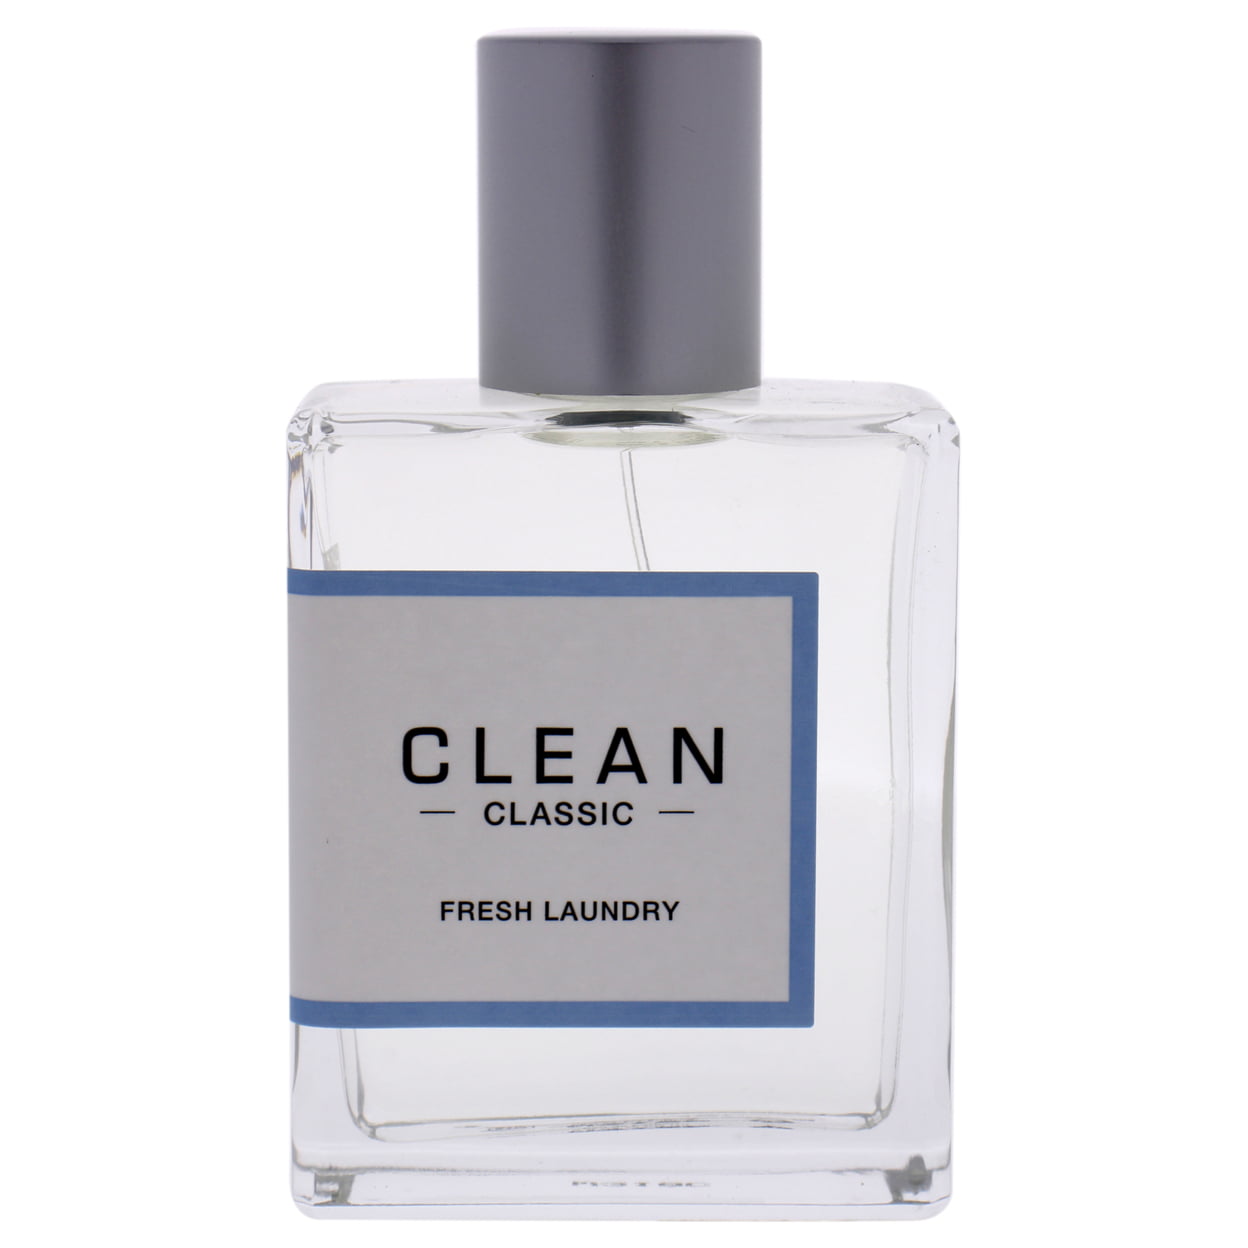 Clean Fresh Laundry Eau de parfum Spray For Women 2.14 - Walmart.com